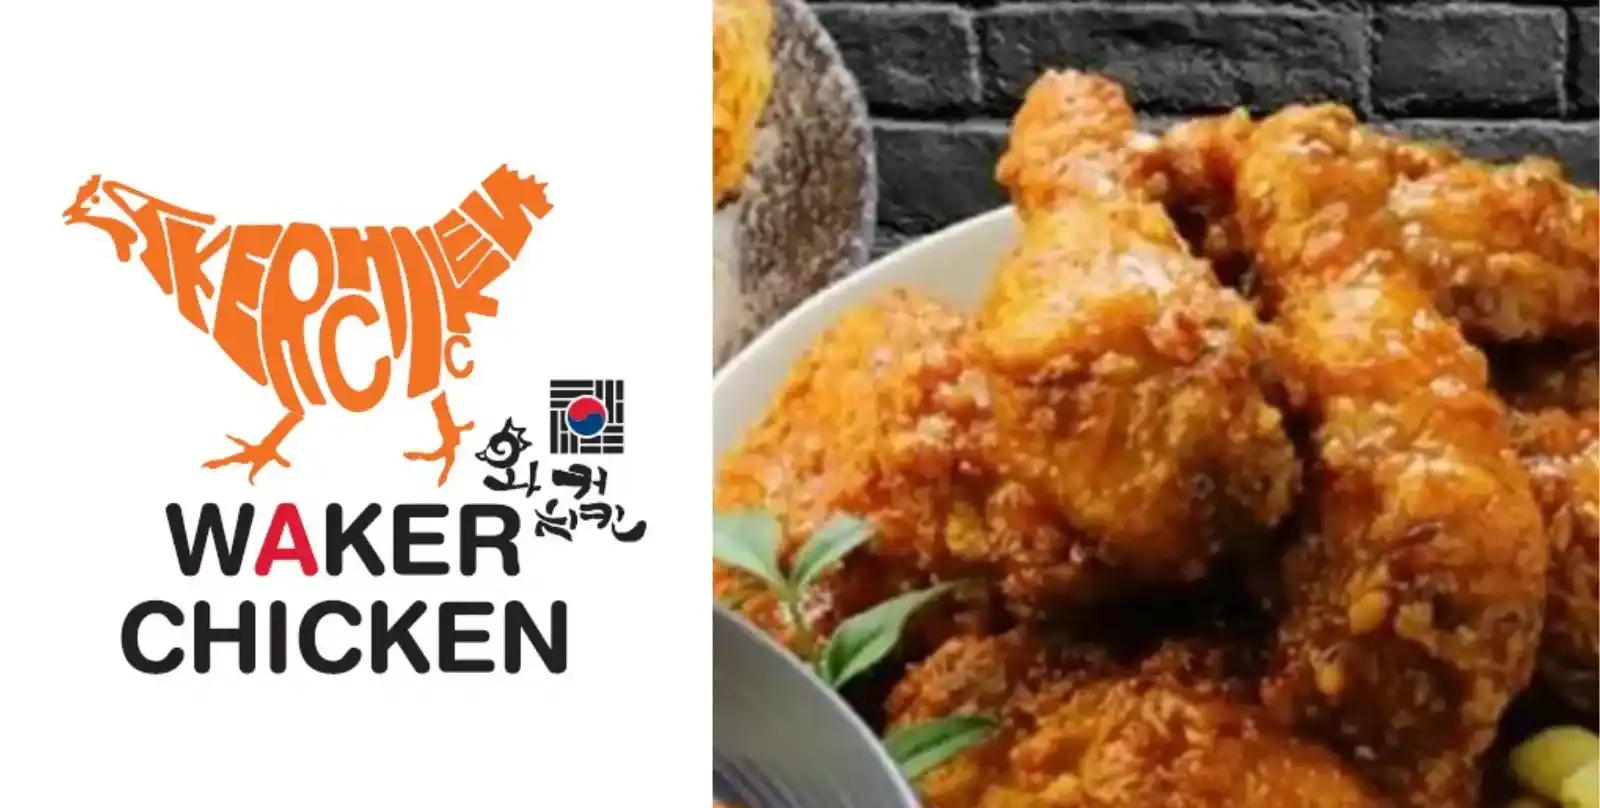 Ultimate Guide To Waker Chicken Singapore Menu & Price 2023